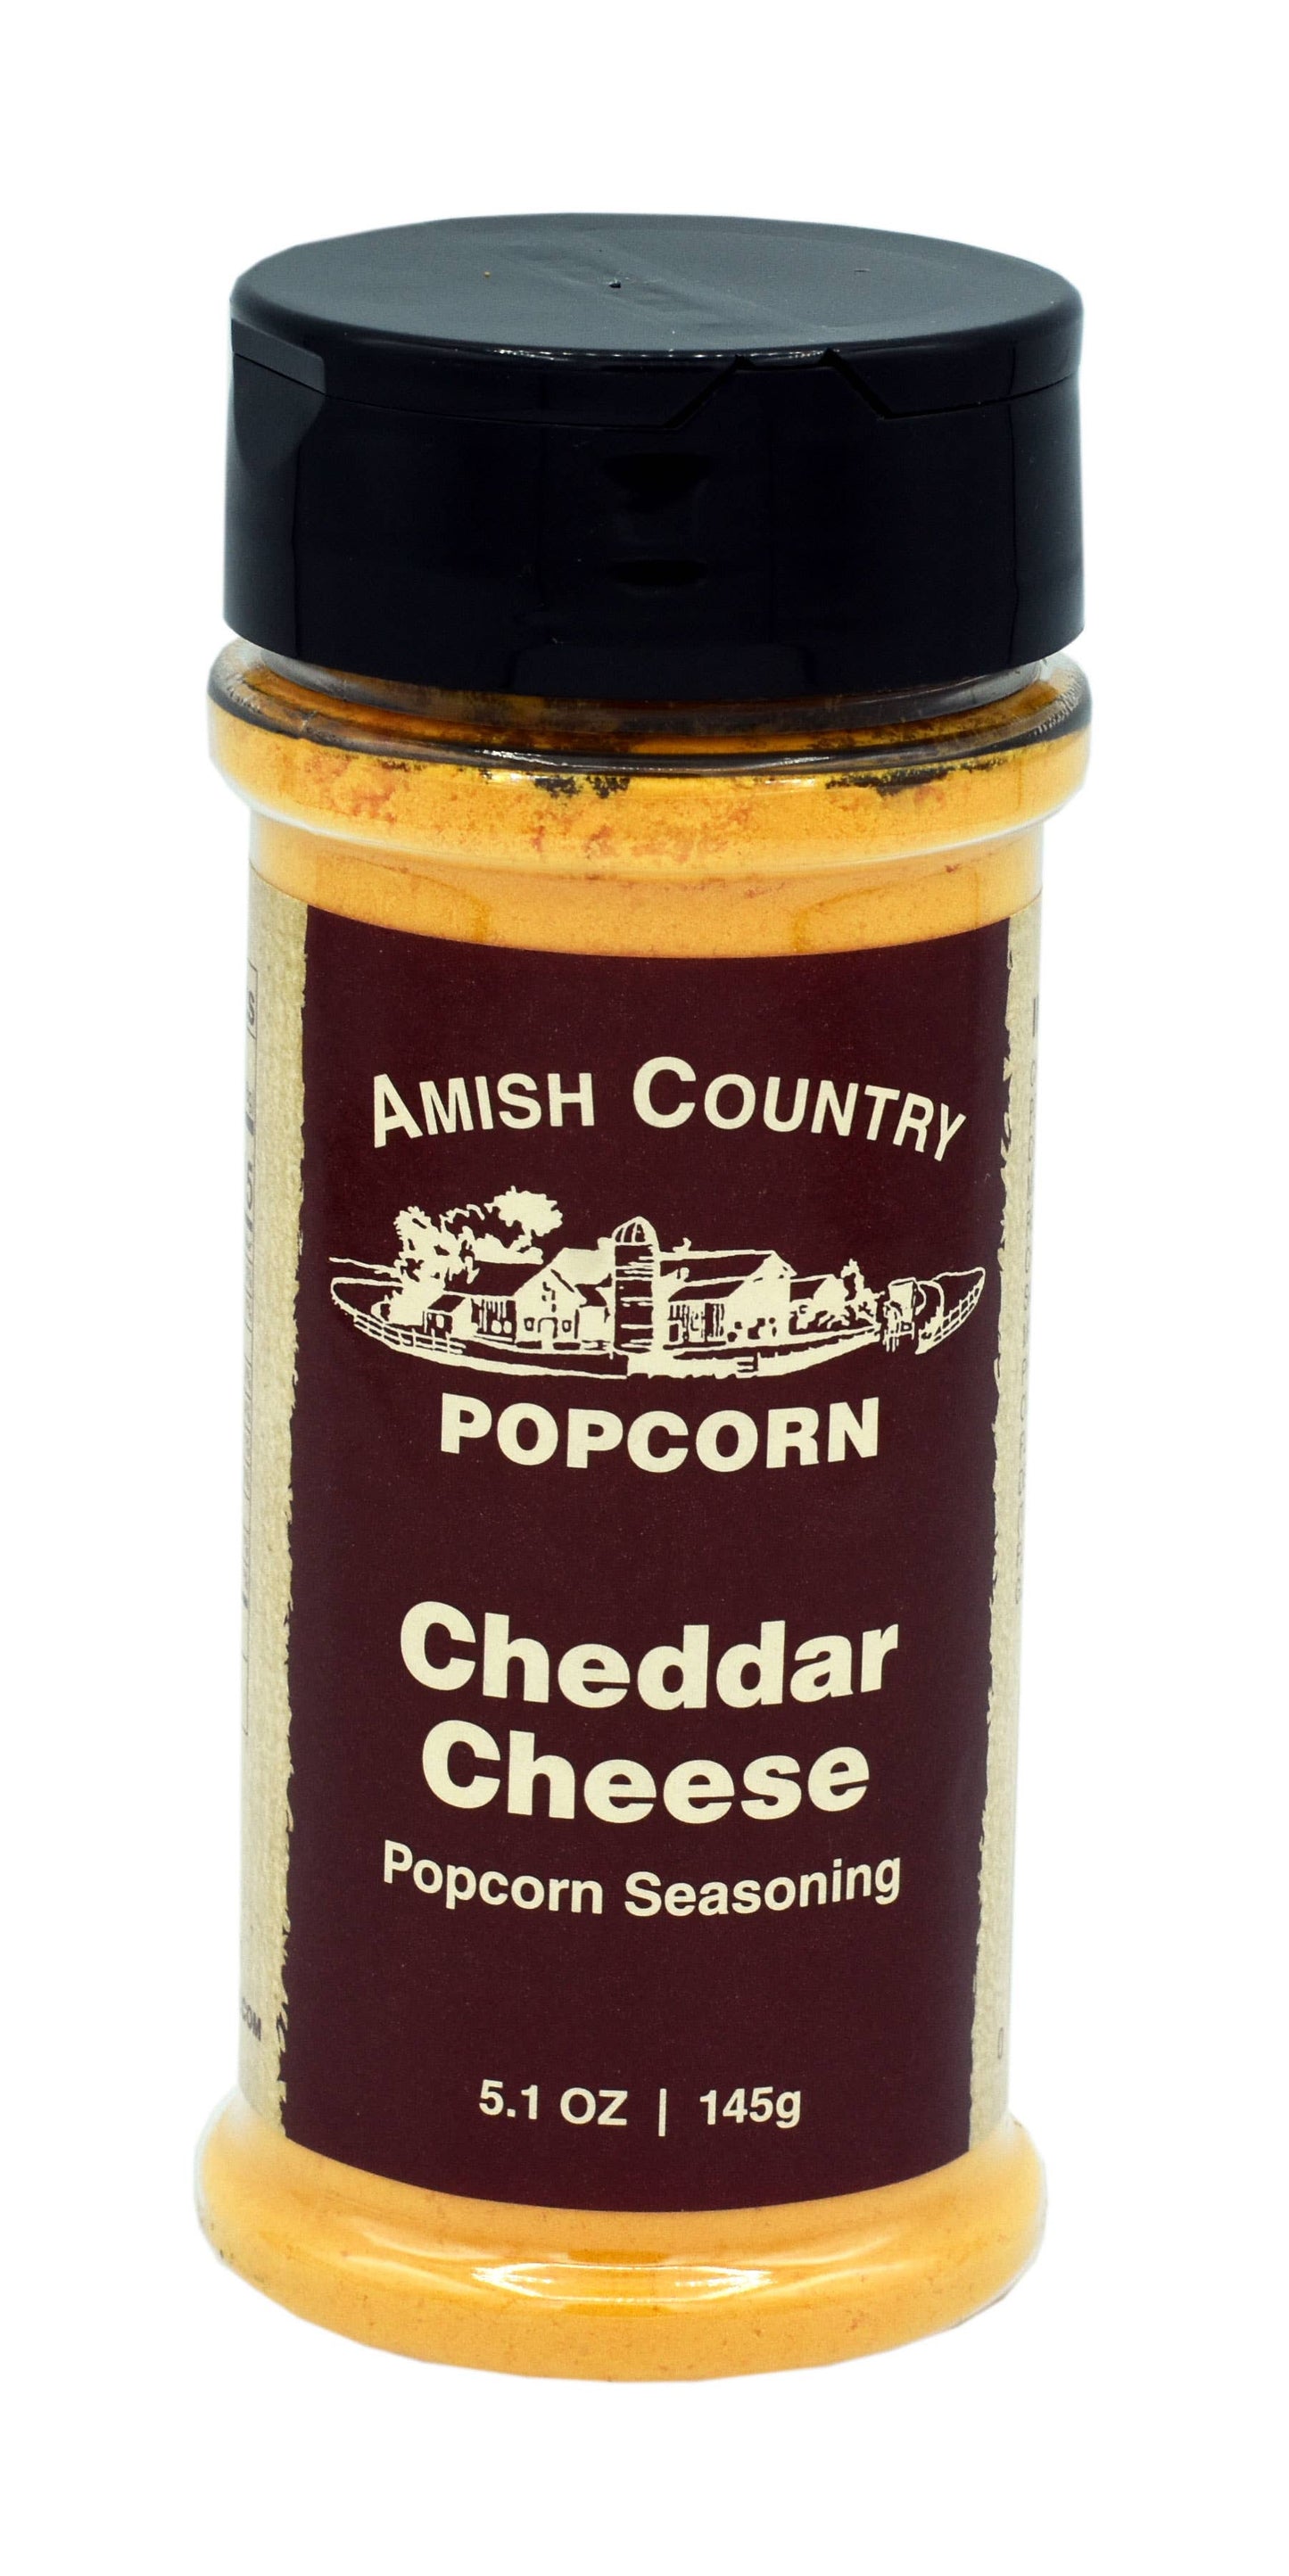 Cheddar Cheese Popcorn Seasoning